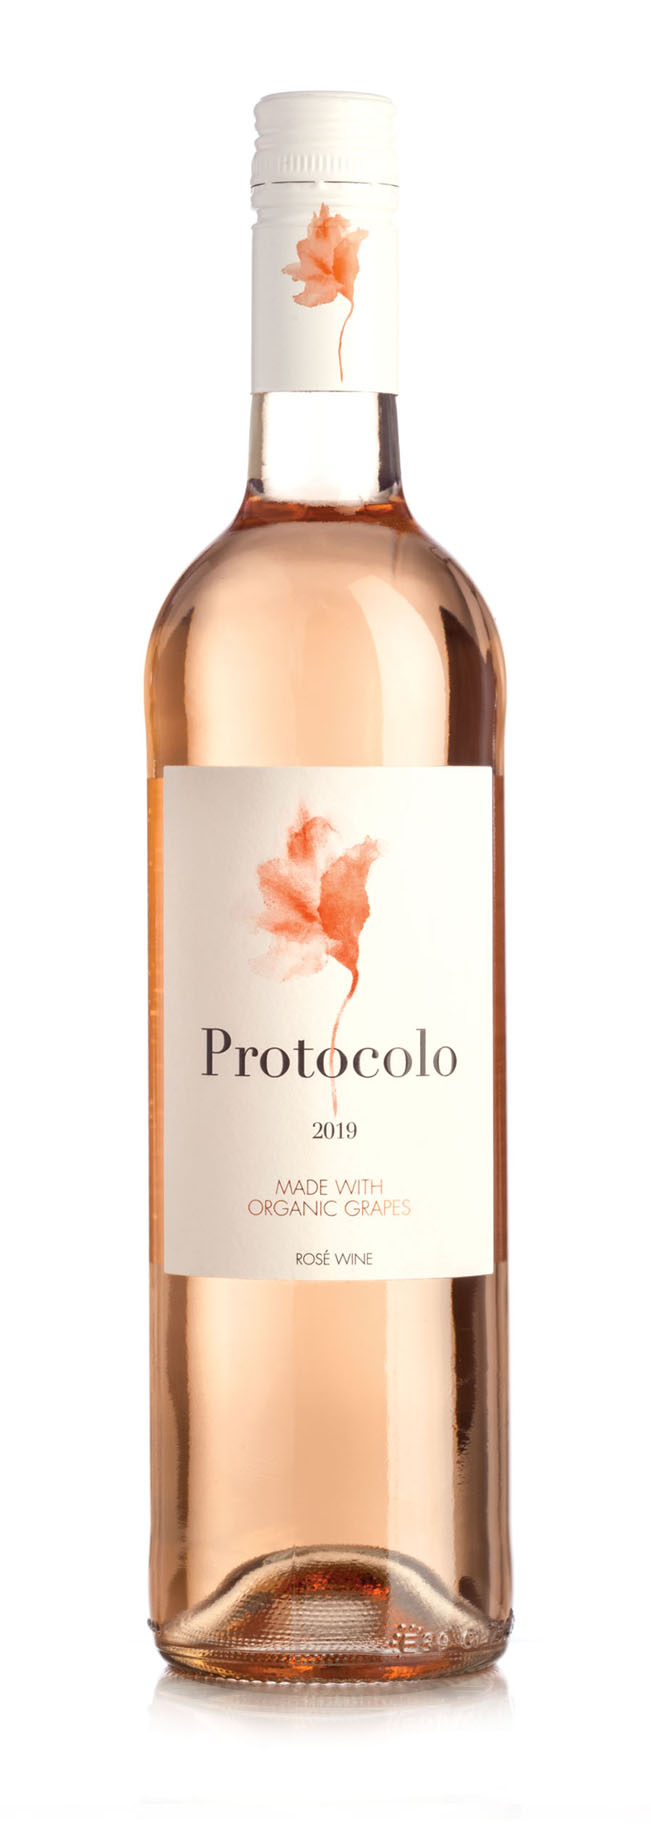 Protocolo Rosado made with Organic Grapes Bottle Photo